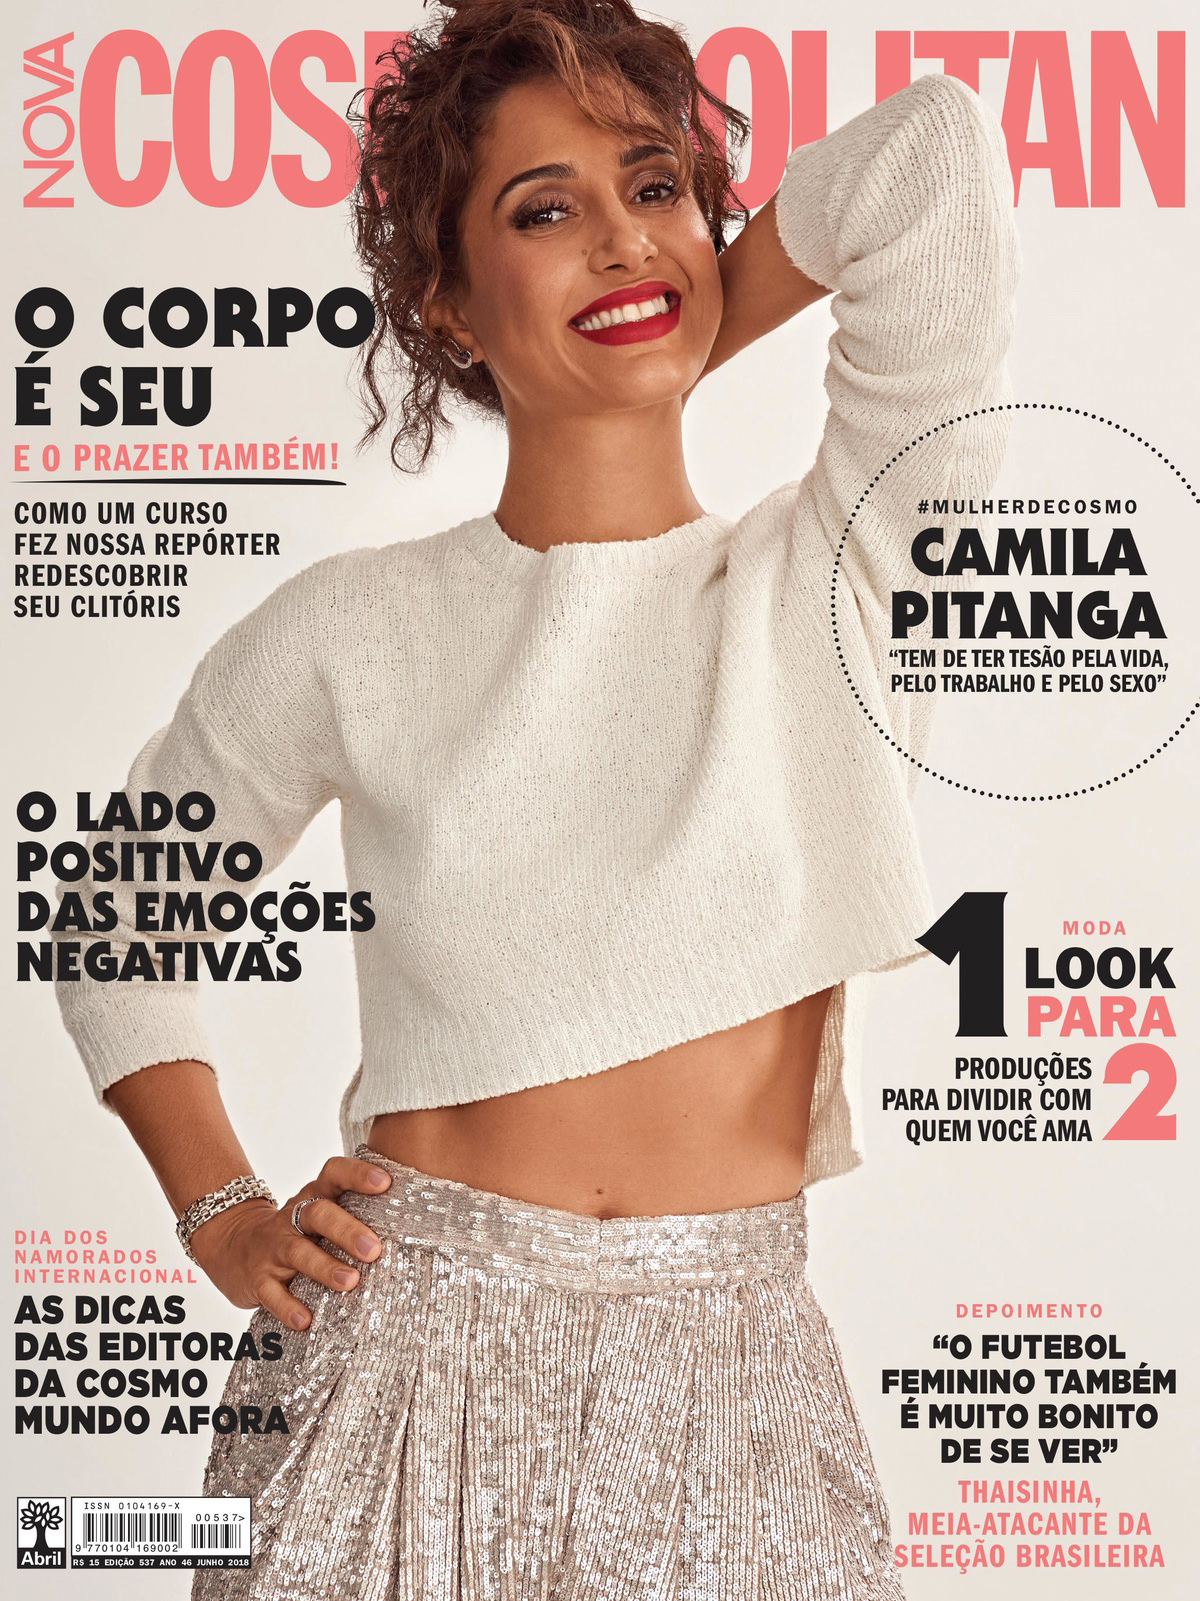 tavinho-costa_camila-pitanga_cosmopolitan_2019 (1).jpg